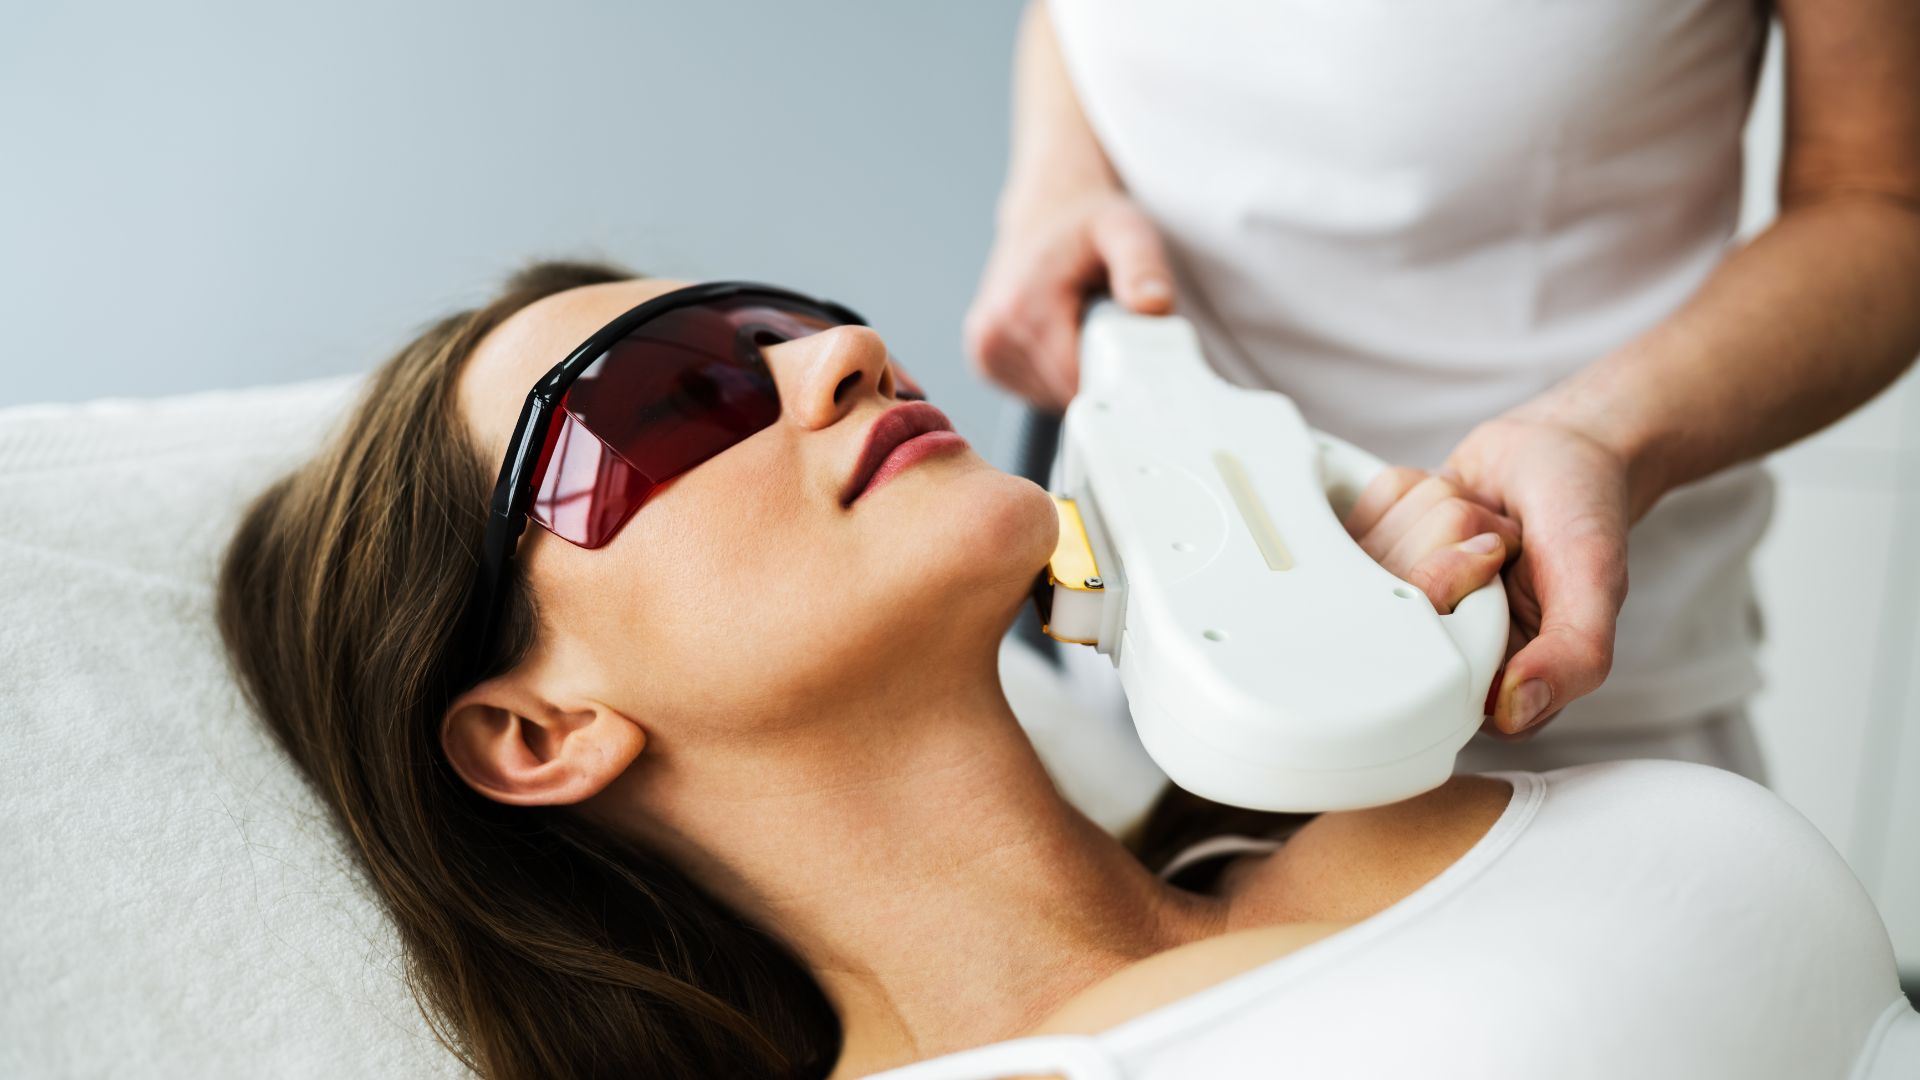 ENT & Facial Plastic Surgery Specialists’ Laser Skin Treatments